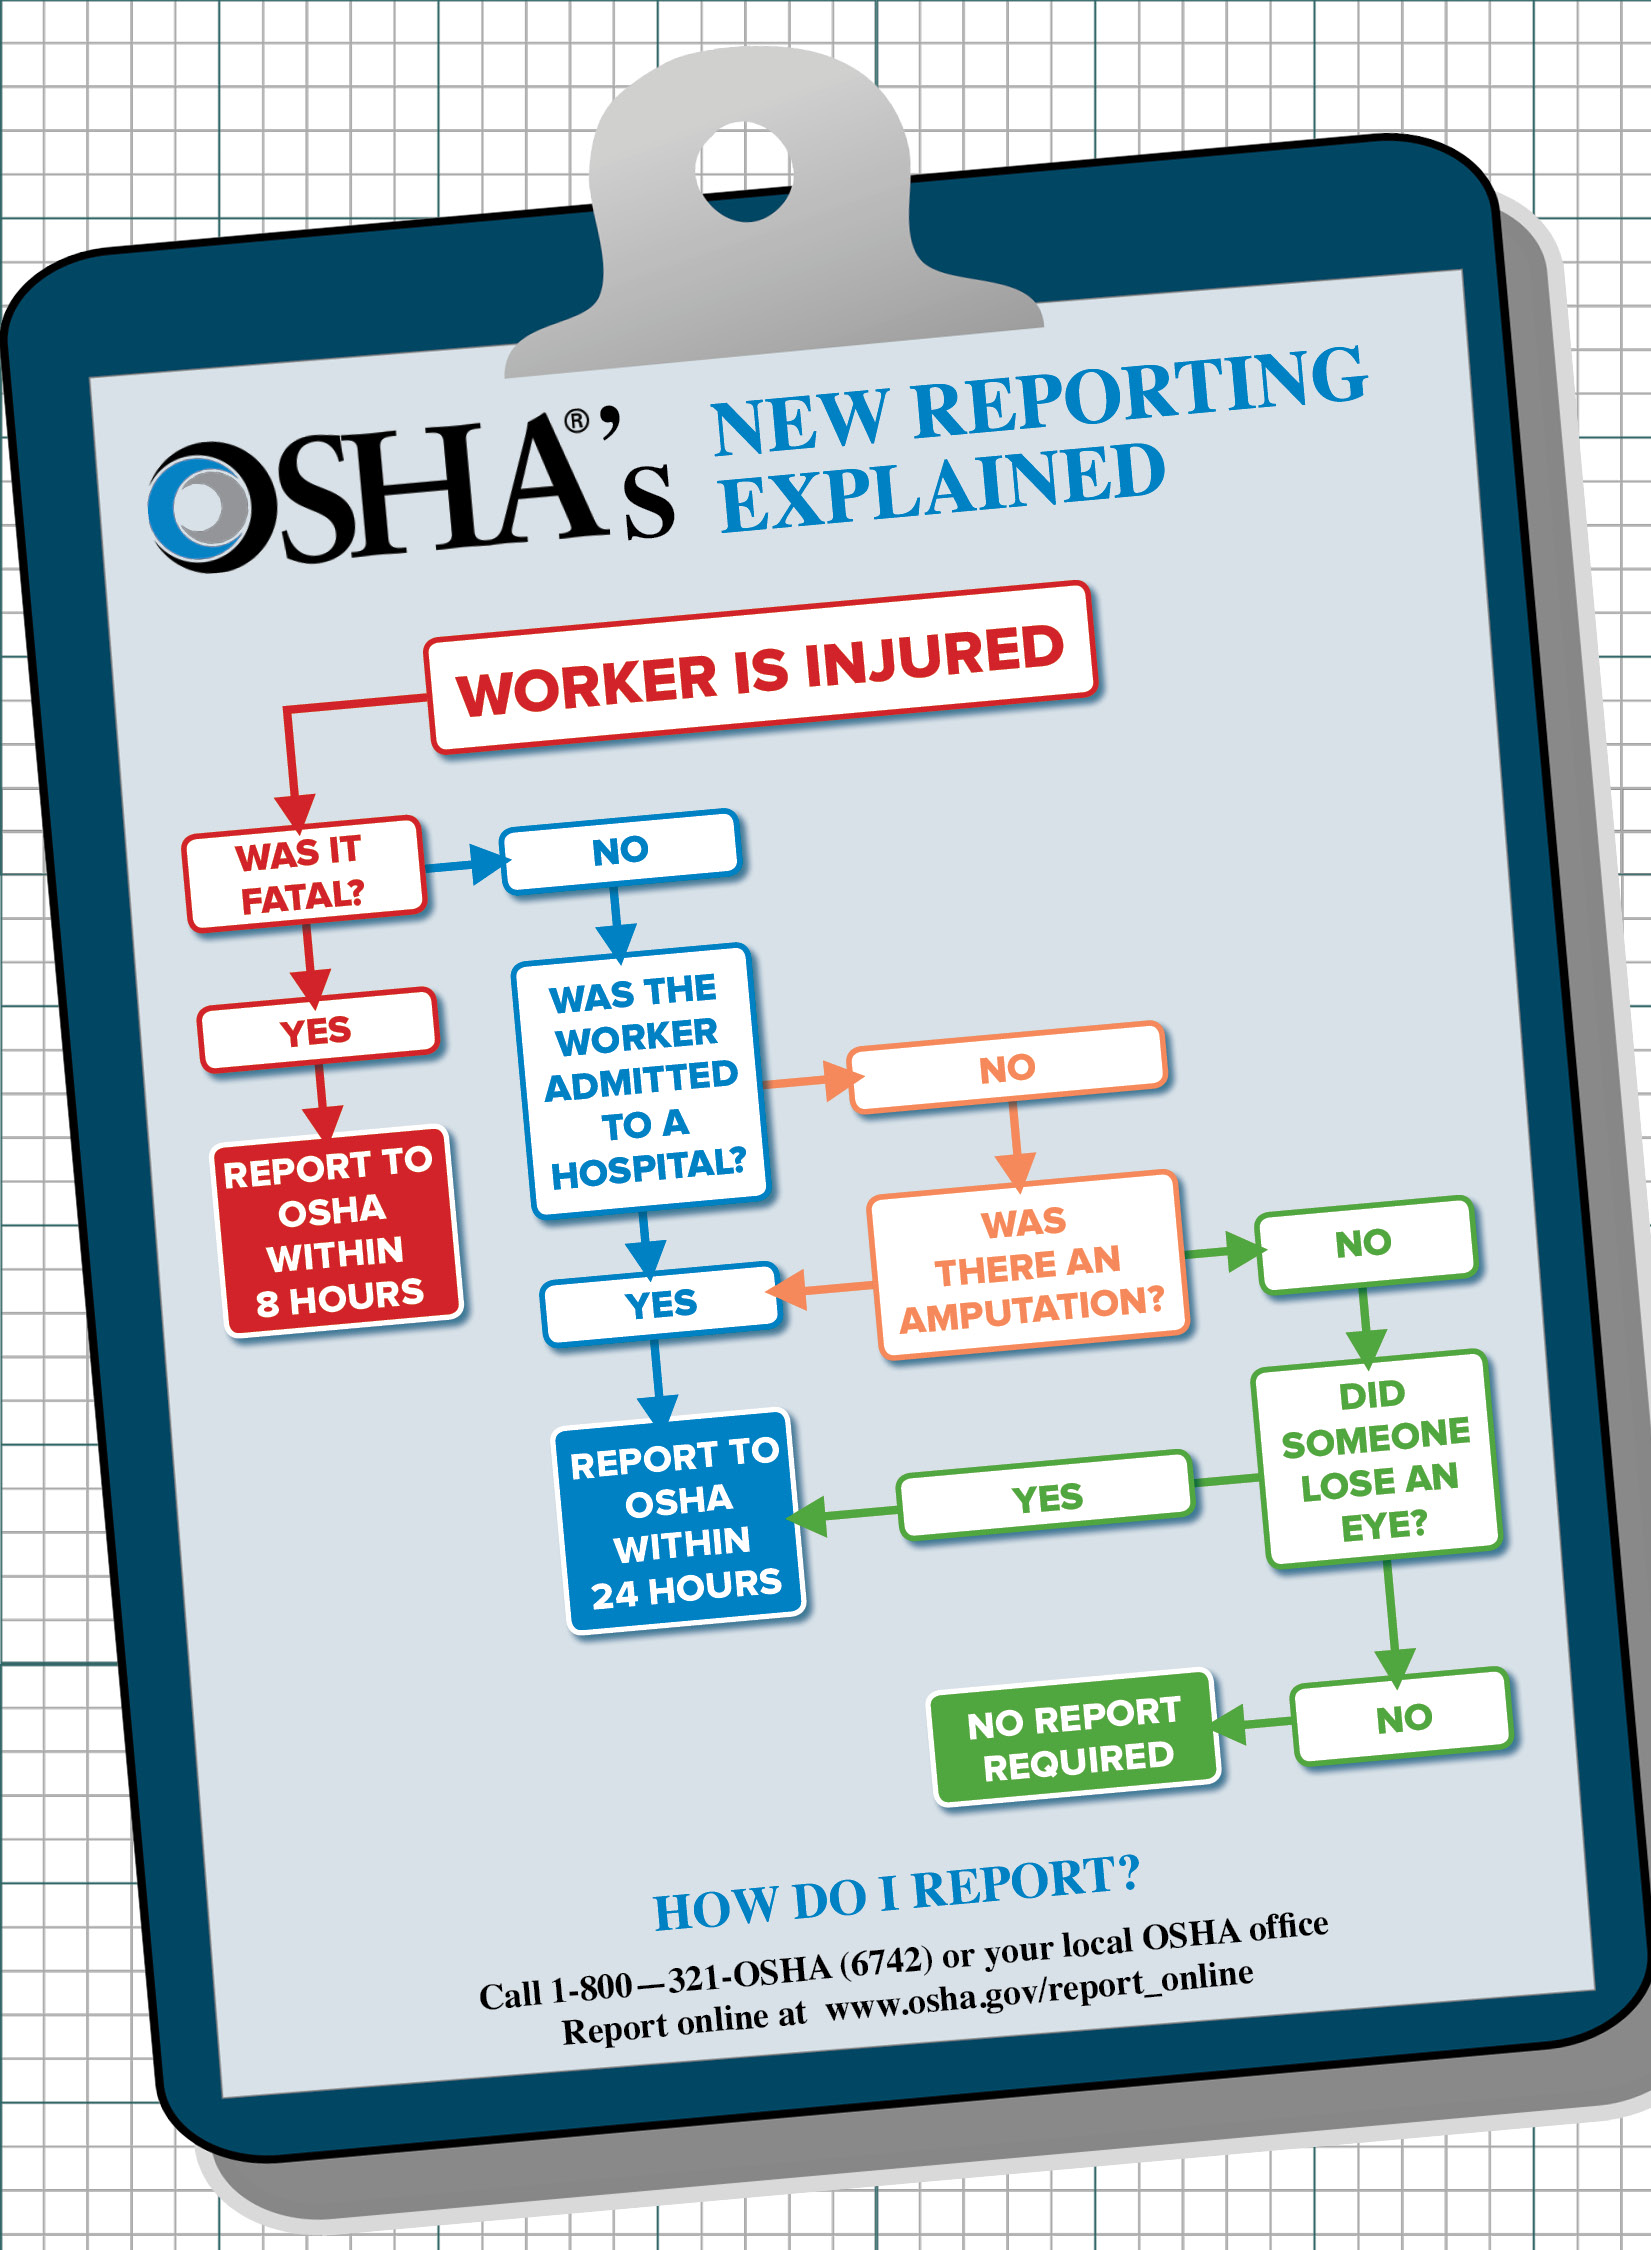 OSHA's New Reporting Explained